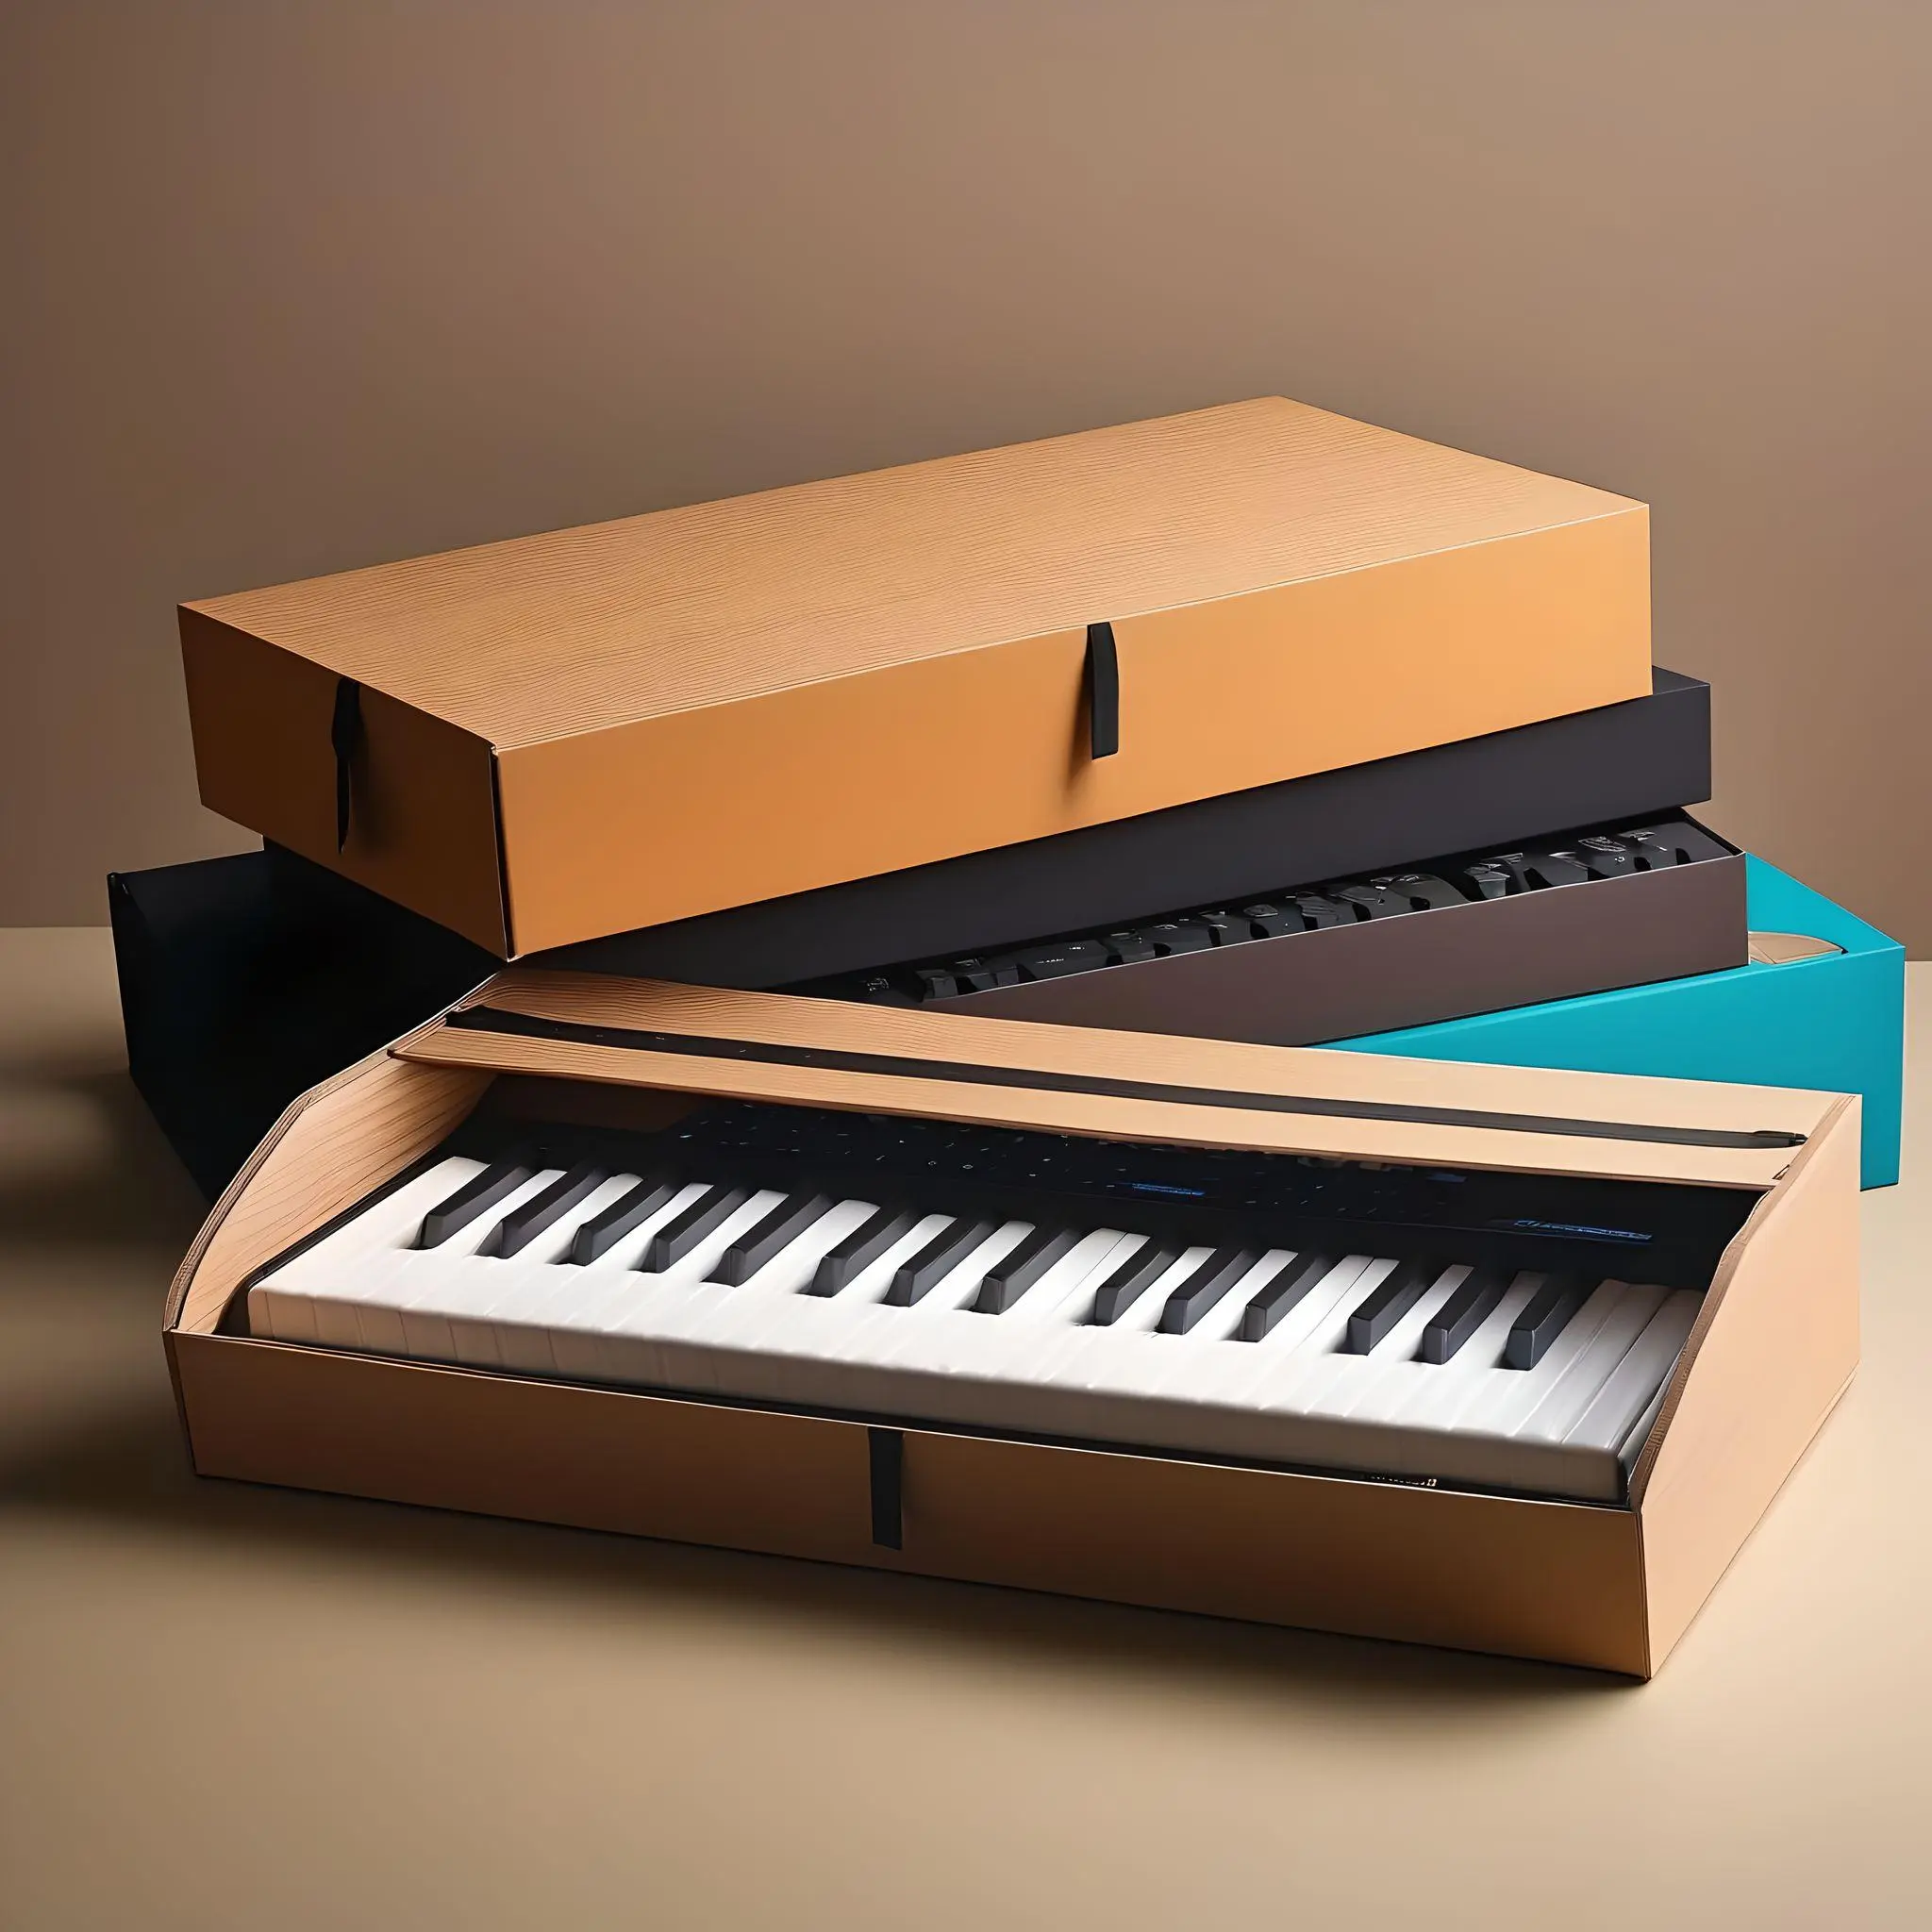 Keyboard Boxes